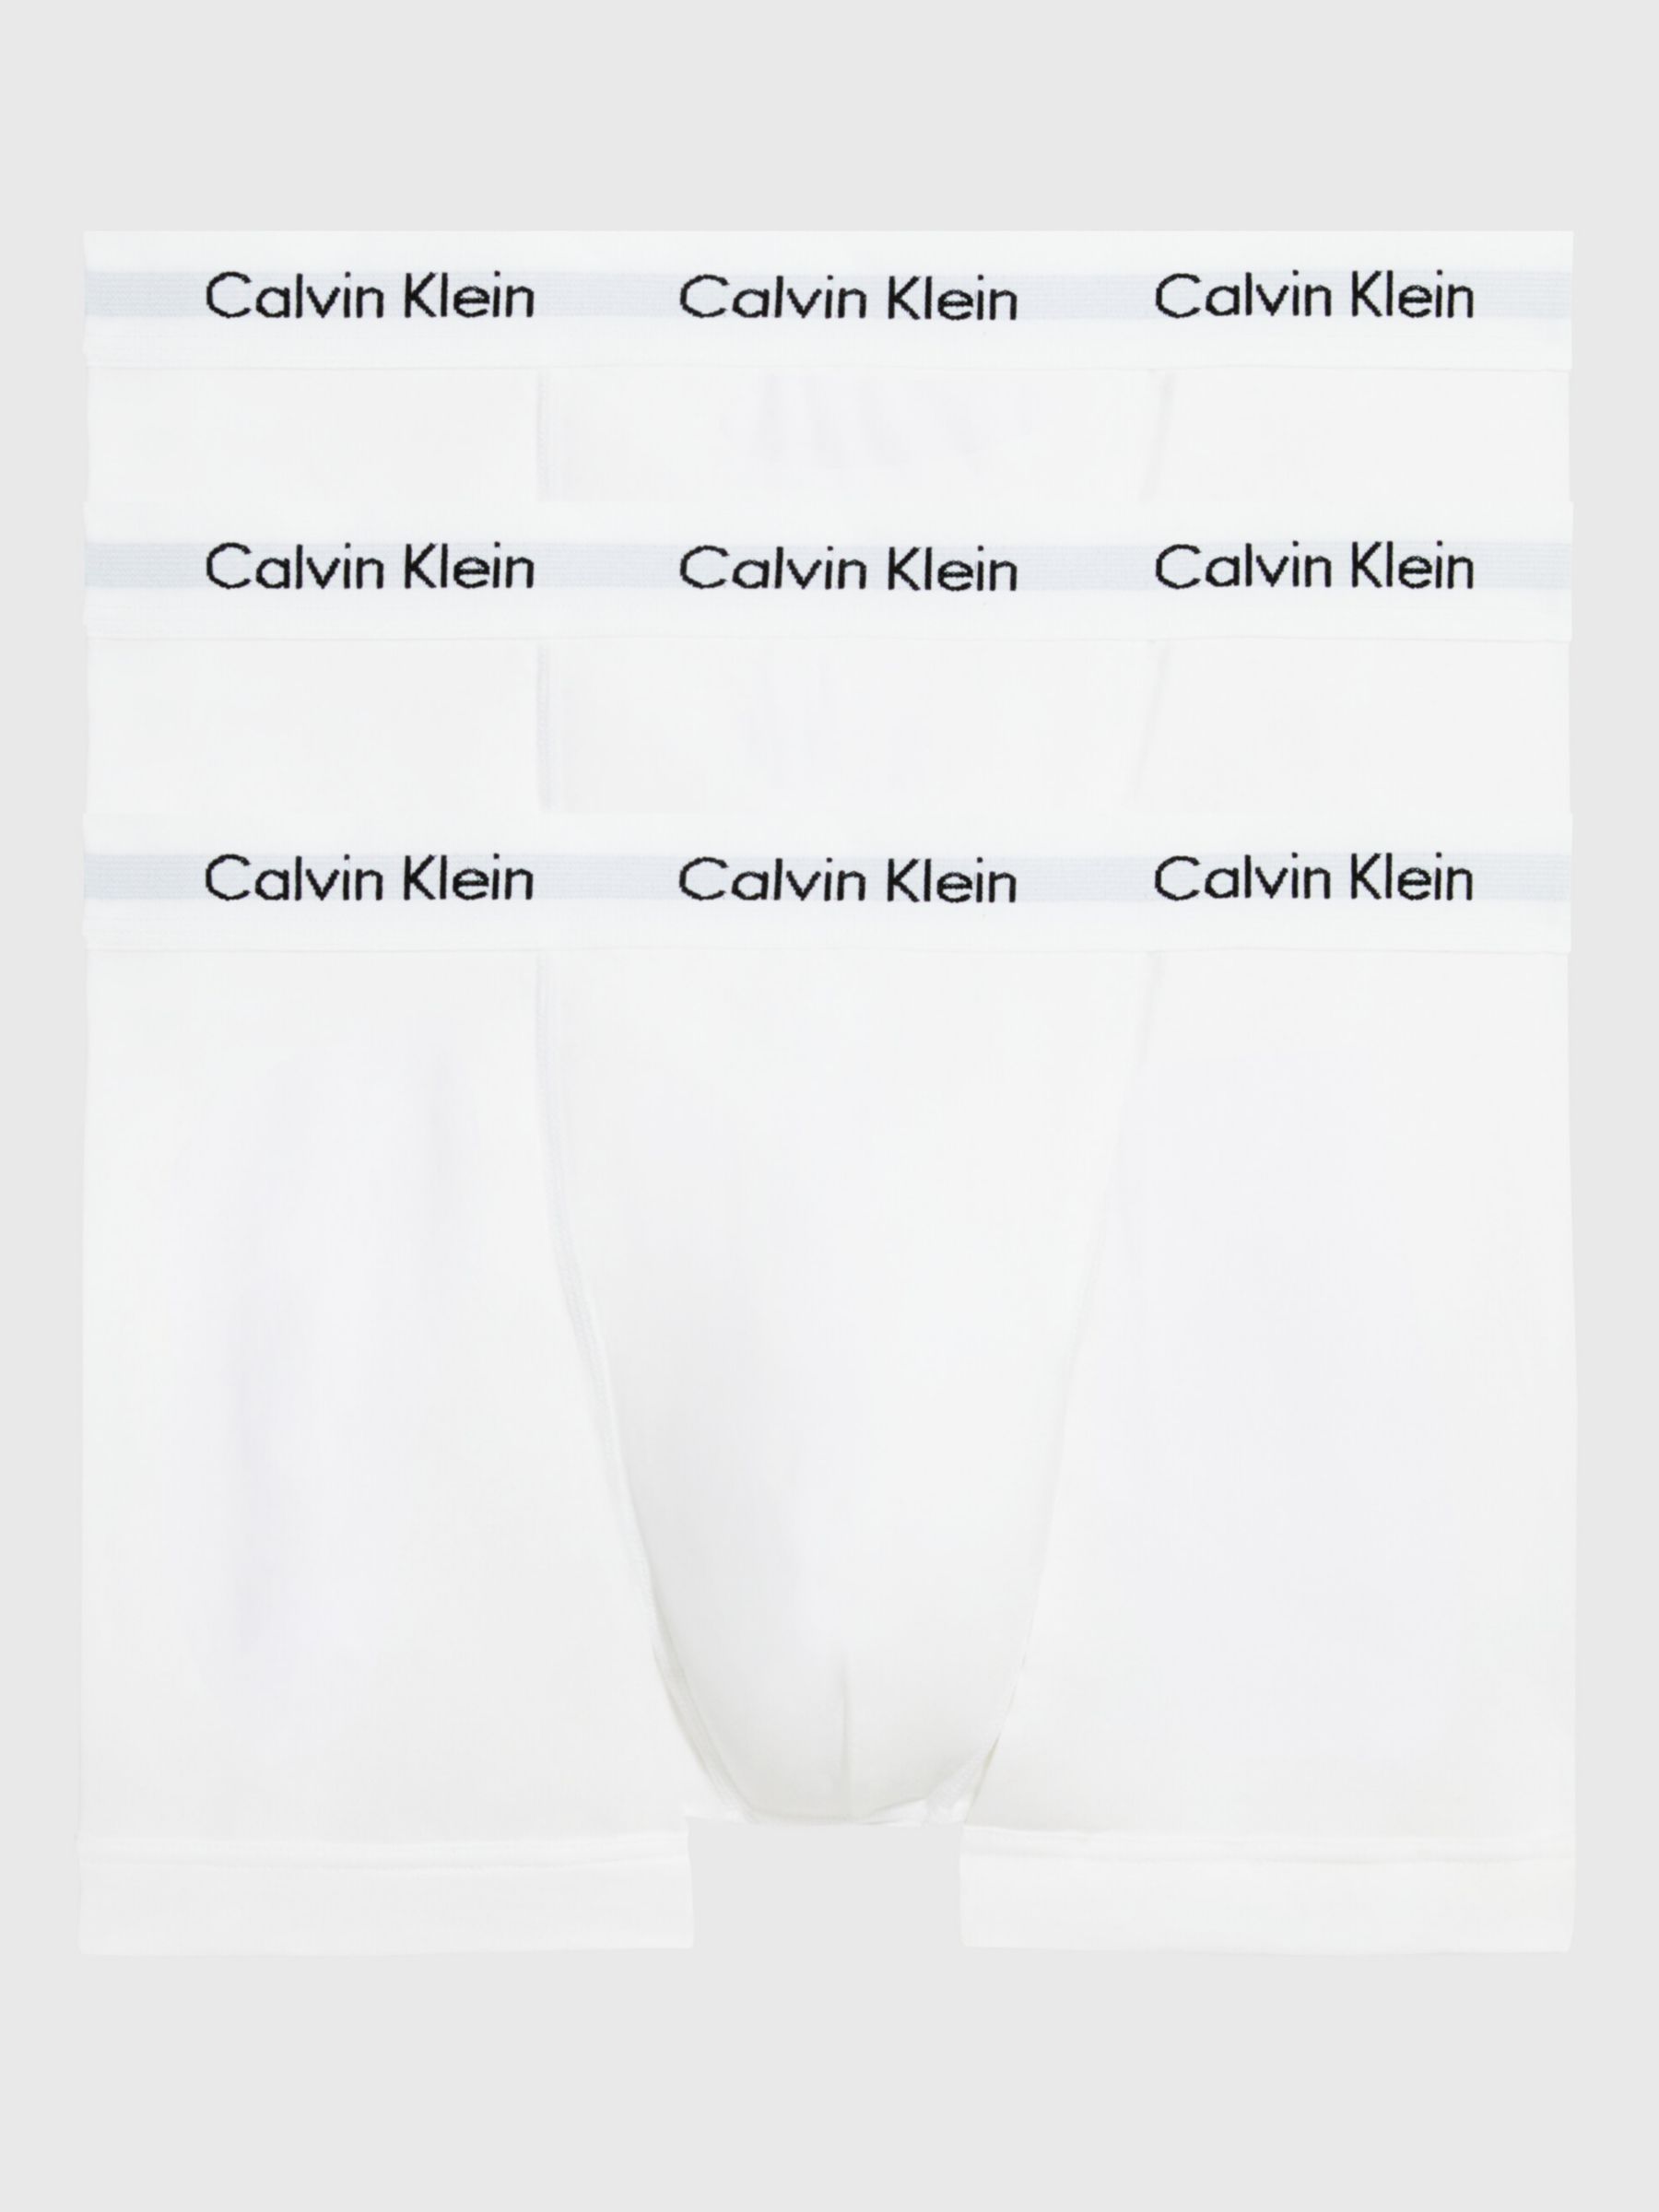 Calvin Klein Regular Cotton Stretch Trunks, Pack of 3, White, XS